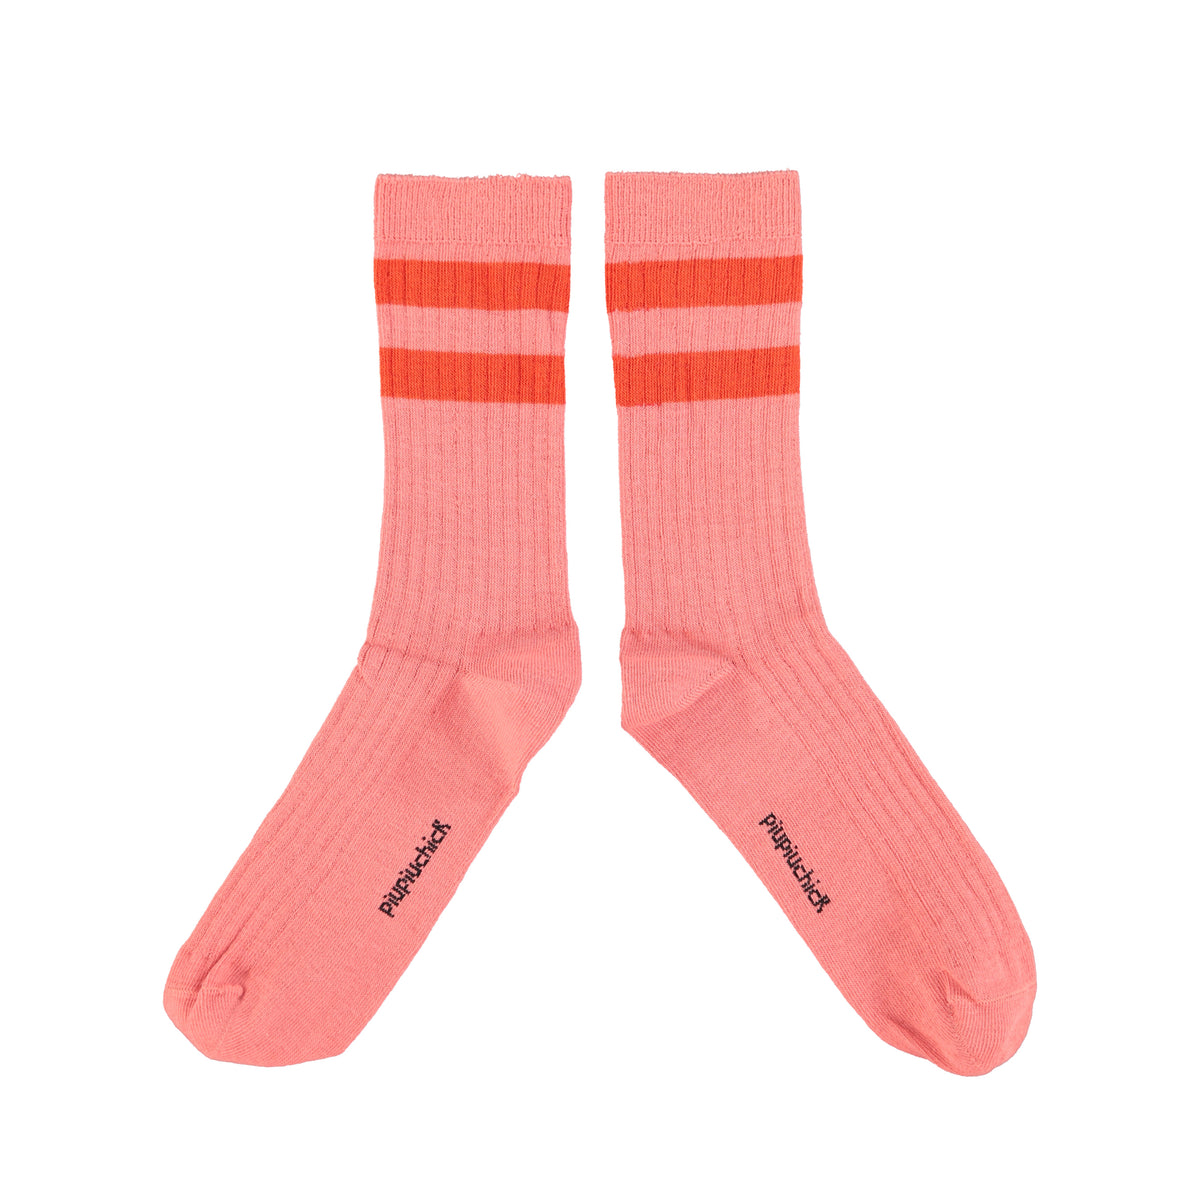 Piupiuchick Socken - orange/pink